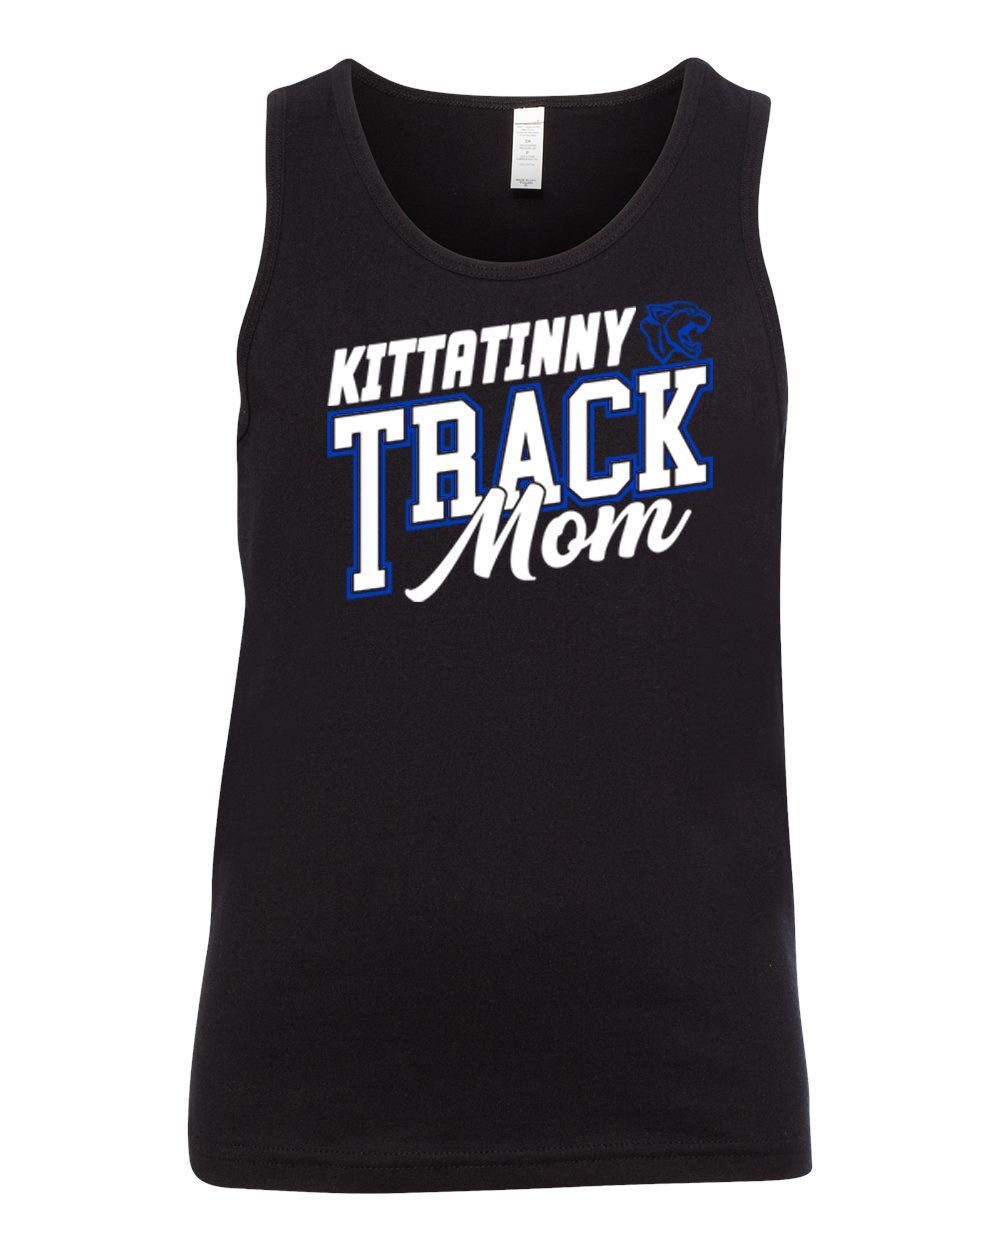 Kittatinny Track design 4 Muscle Tank Top